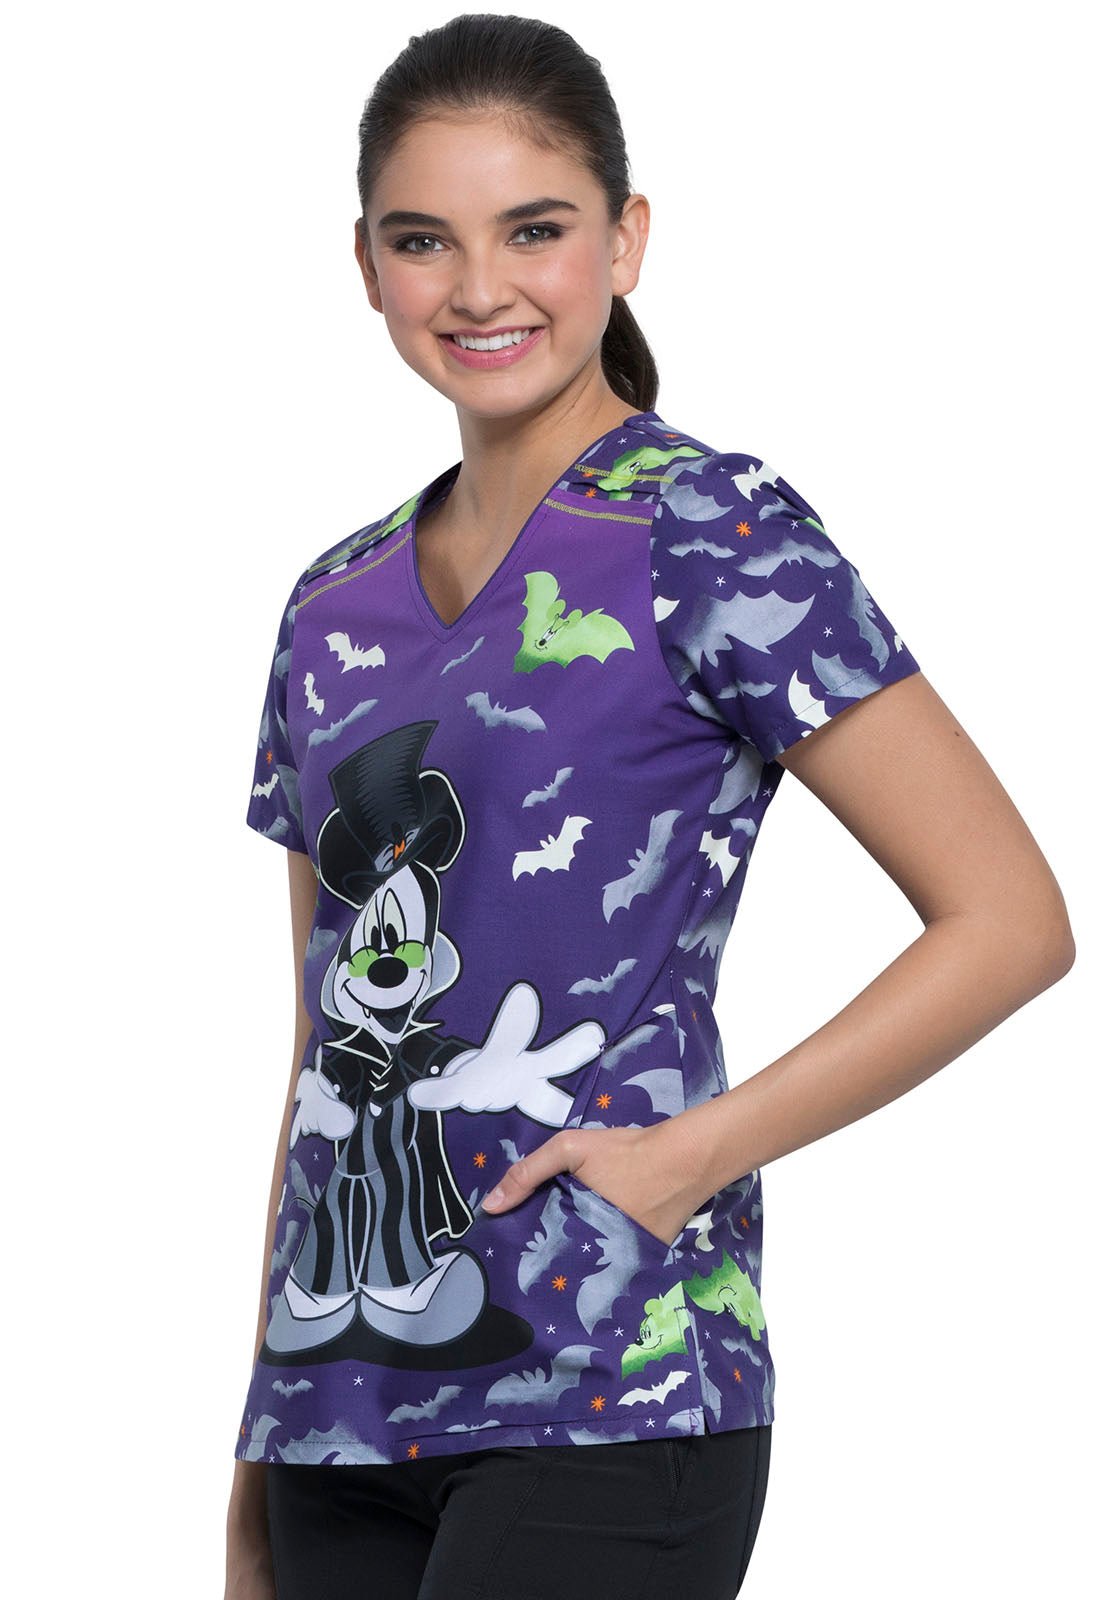 Mickey Mouse Tooniforms Disney Halloween V Neck Scrub Top TF629 MKVAD - Scrubs Select